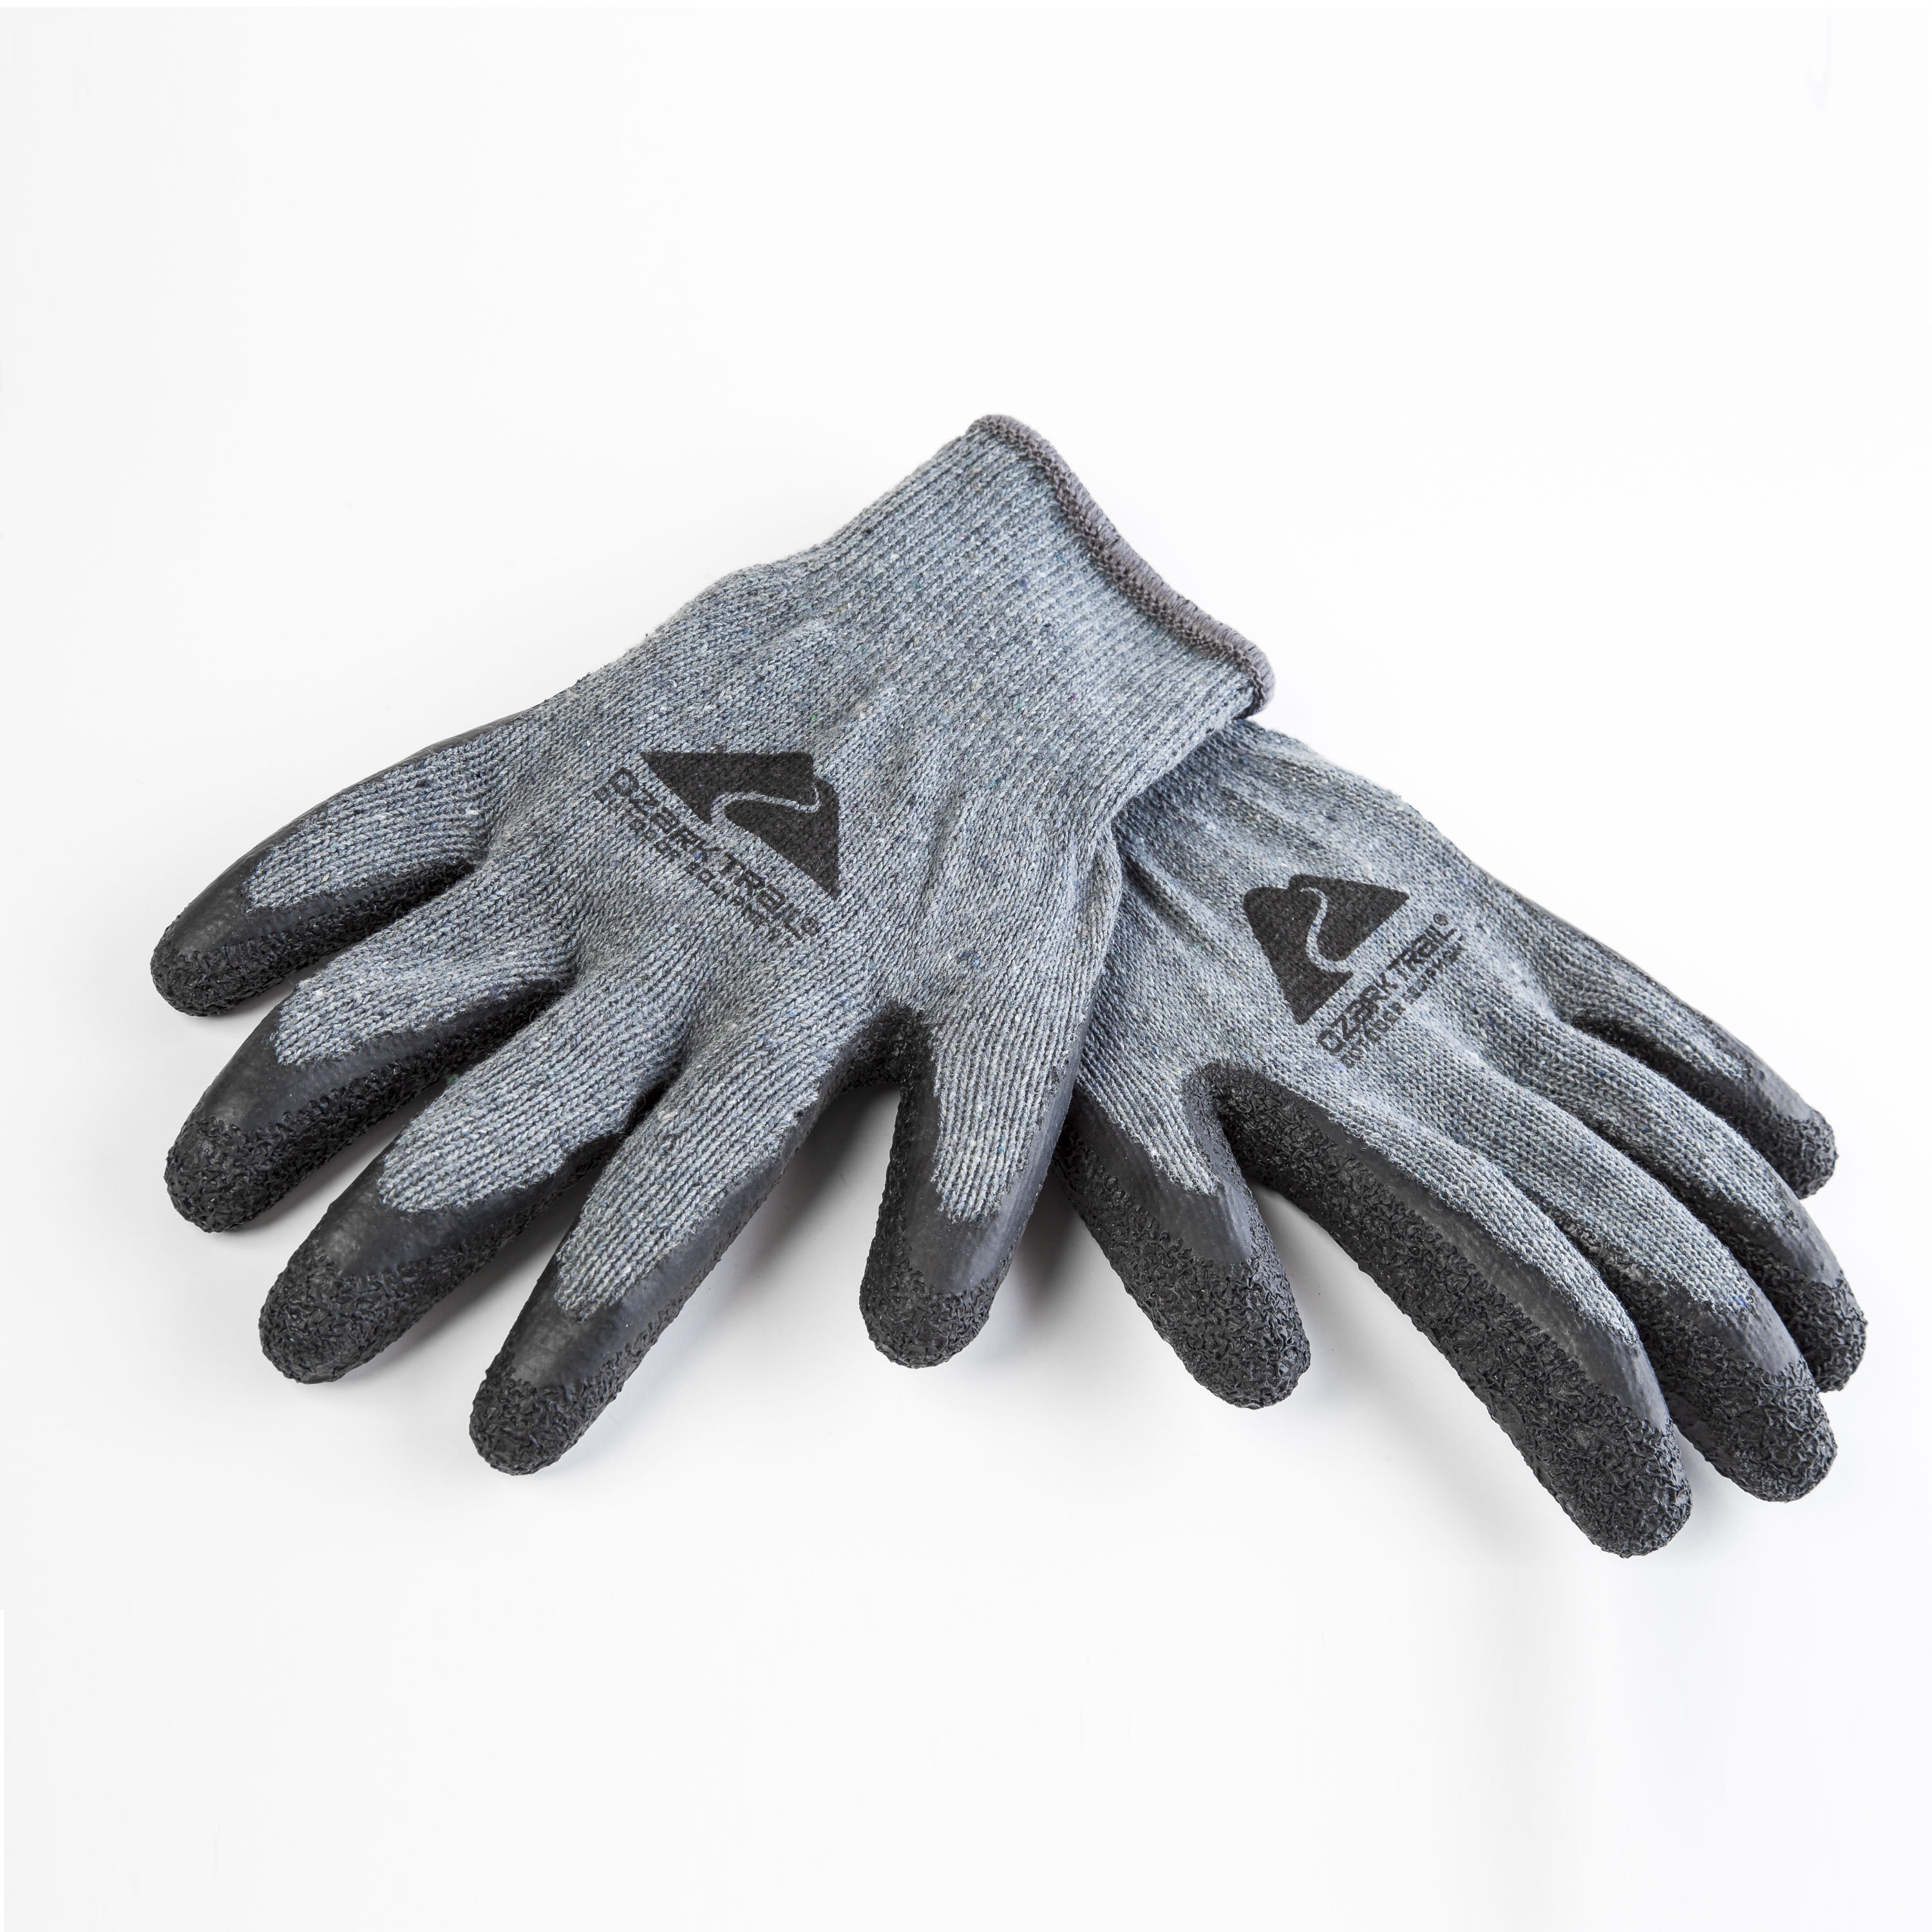 Patrol C-tex Gloves Blue 10 Years Boy DressInn Boys Accessories Gloves 